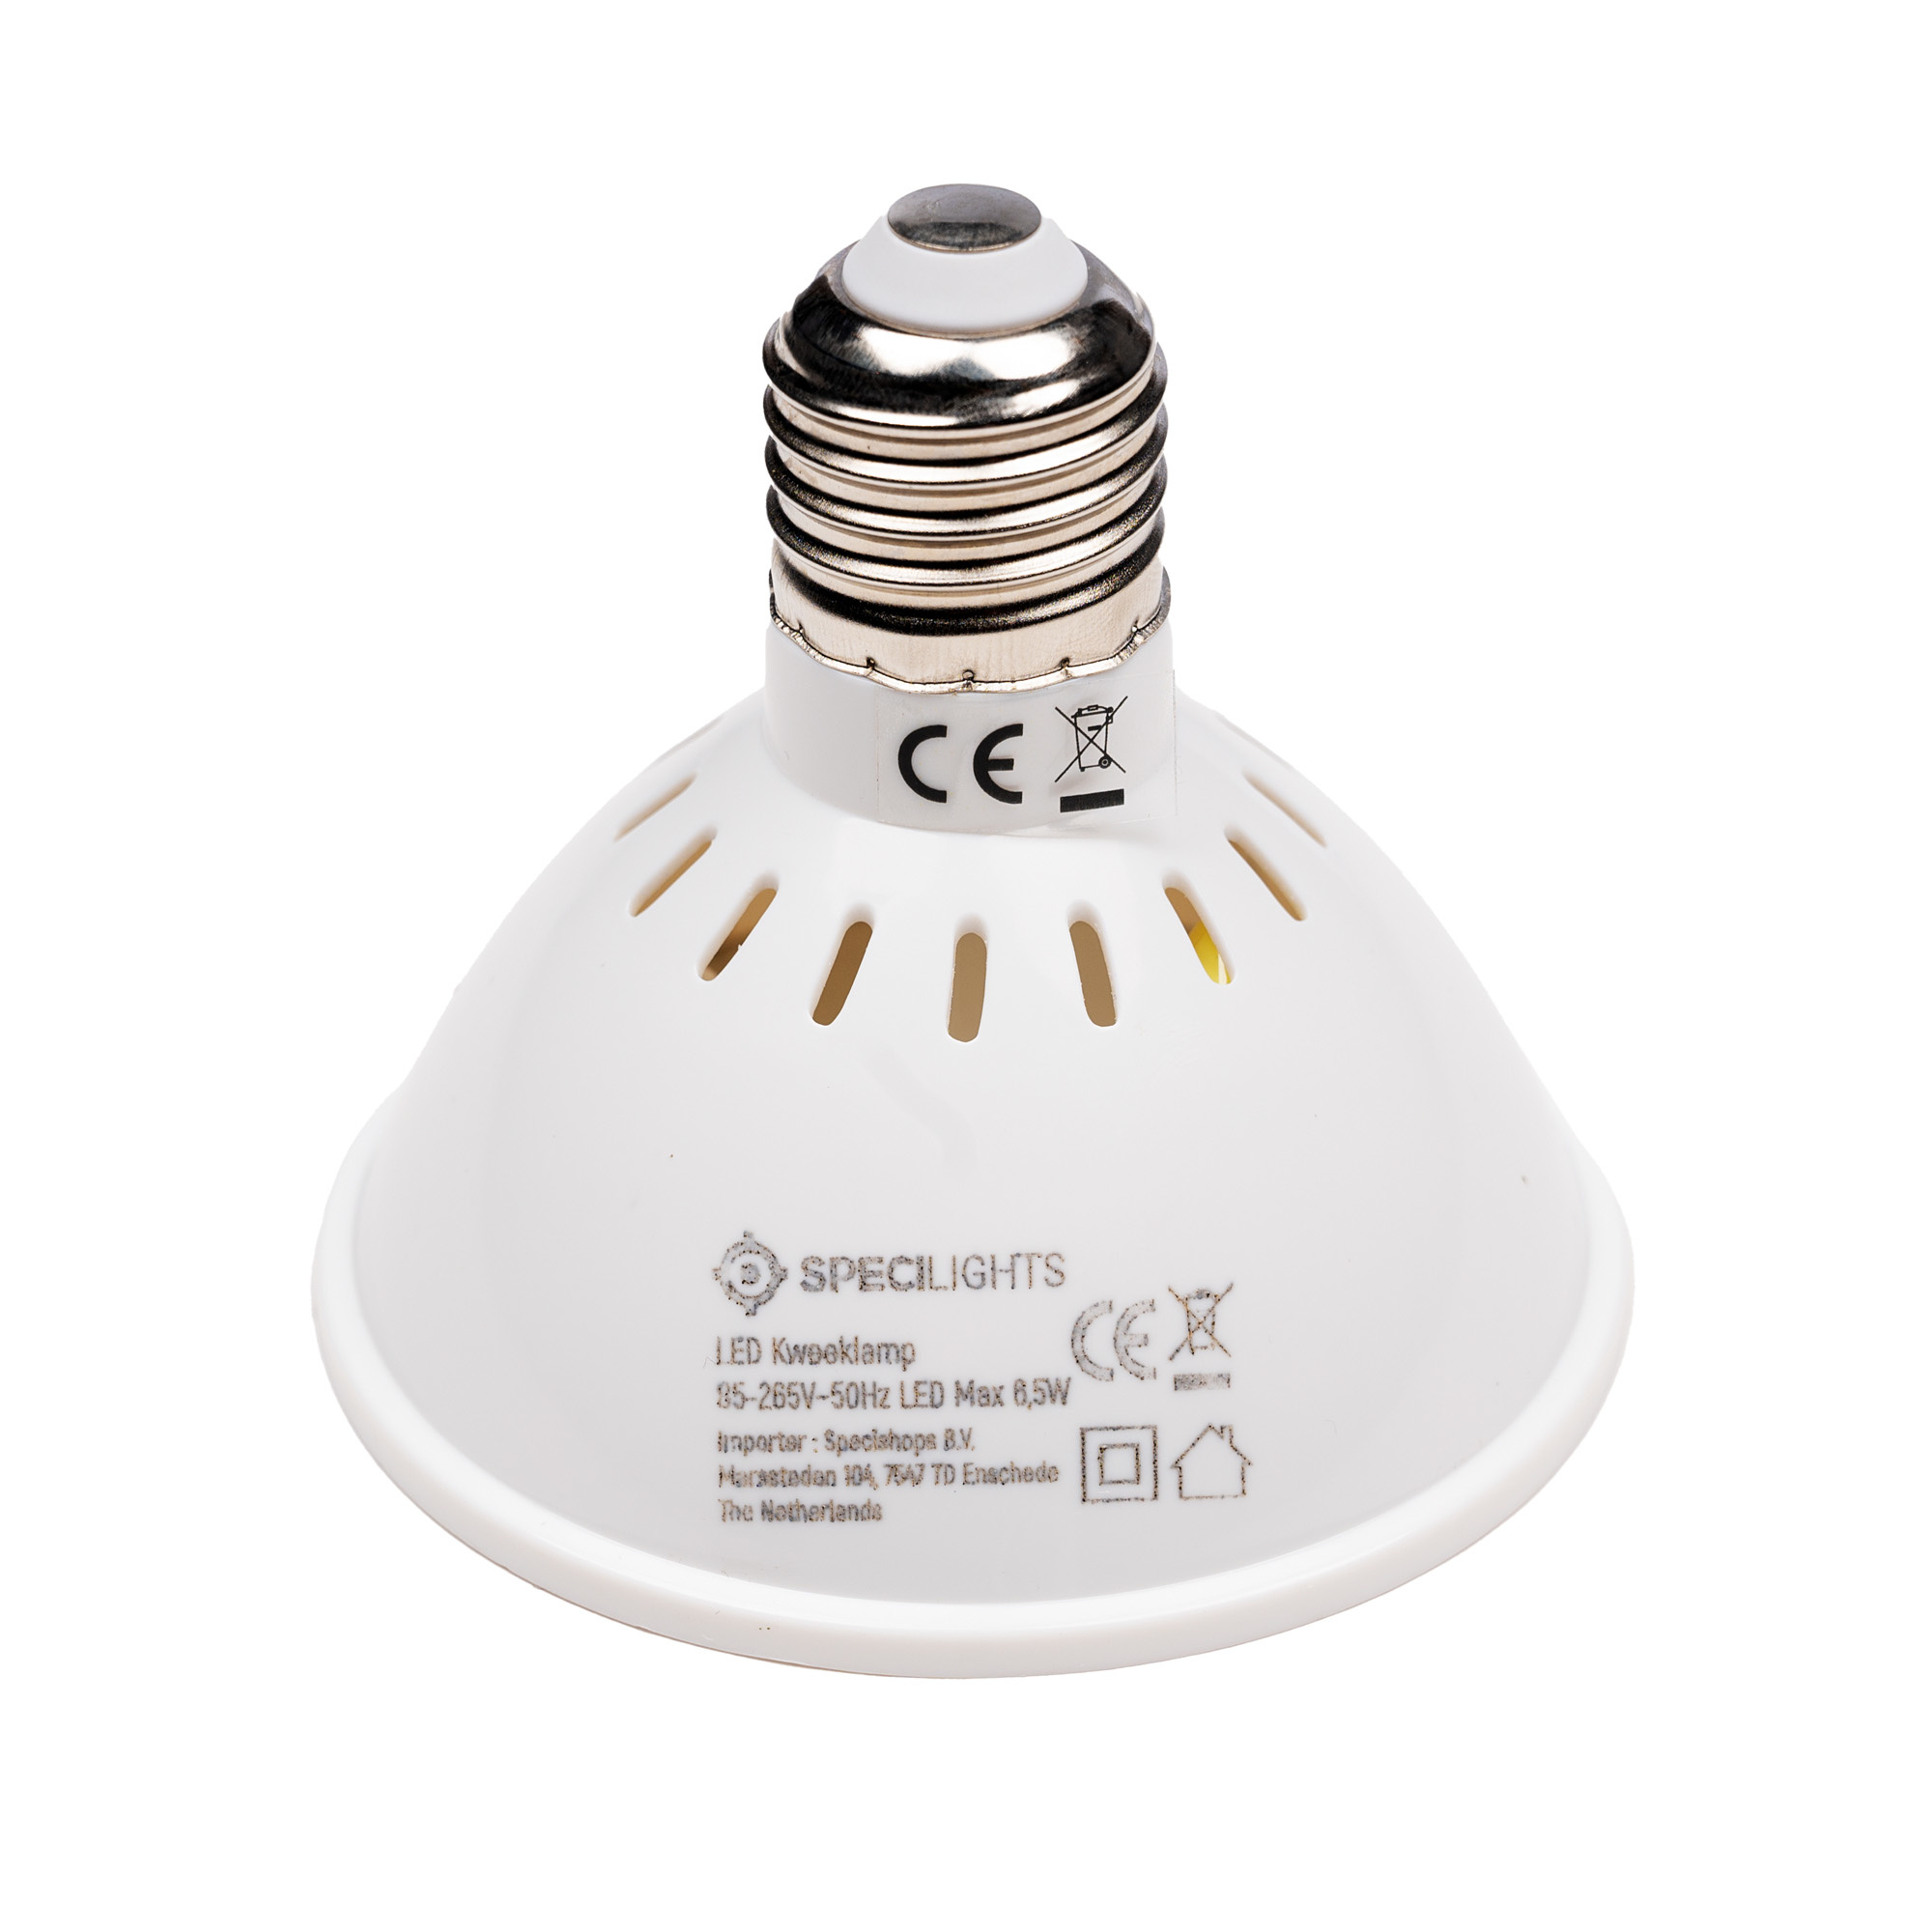 Led Kweeklamp - E27 fitting - 300 LEDs - Full lamp met grote fitting - LedlampshopXL